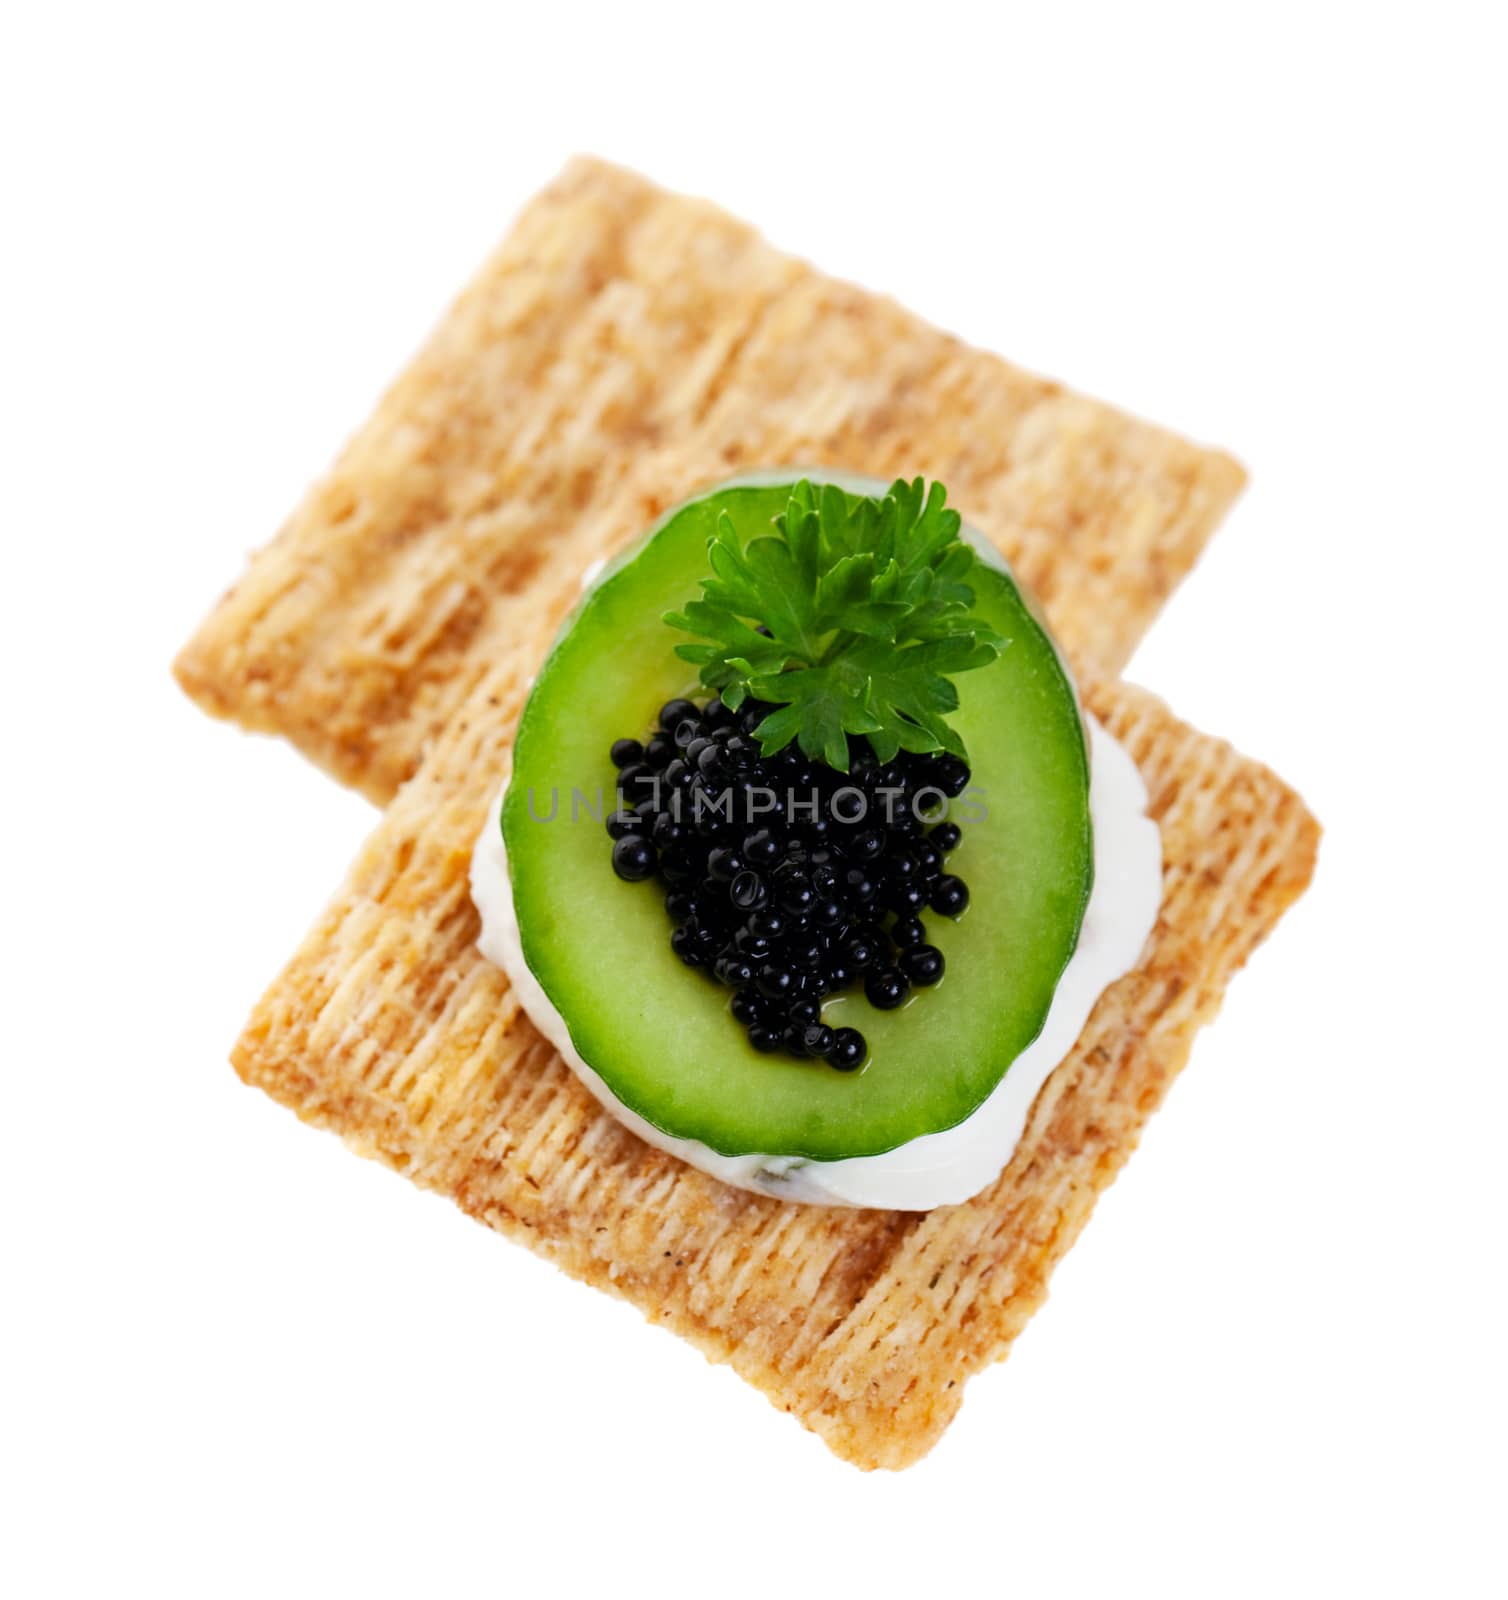 Cool Cucumber and Caviar Cracker by songbird839